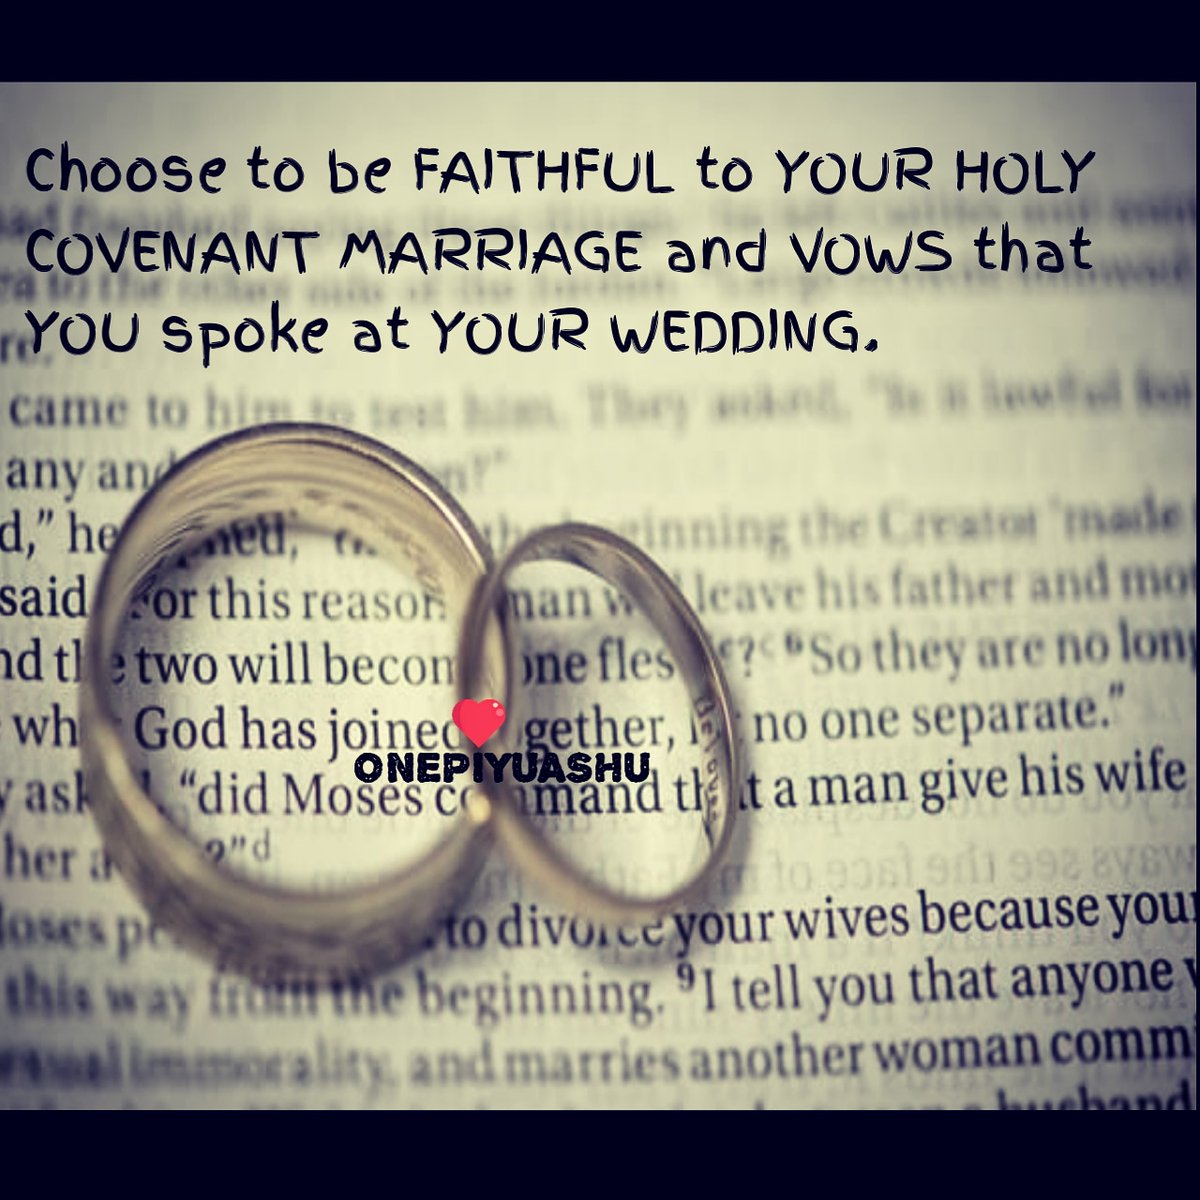 #God #JesusChrist #jesus #christ #Christian #Christians #holymarriage #marriage #covenant #Marriagecovenant #faithful #wife #husband #spouse #marital #vows #wedding #love #unconditionallove